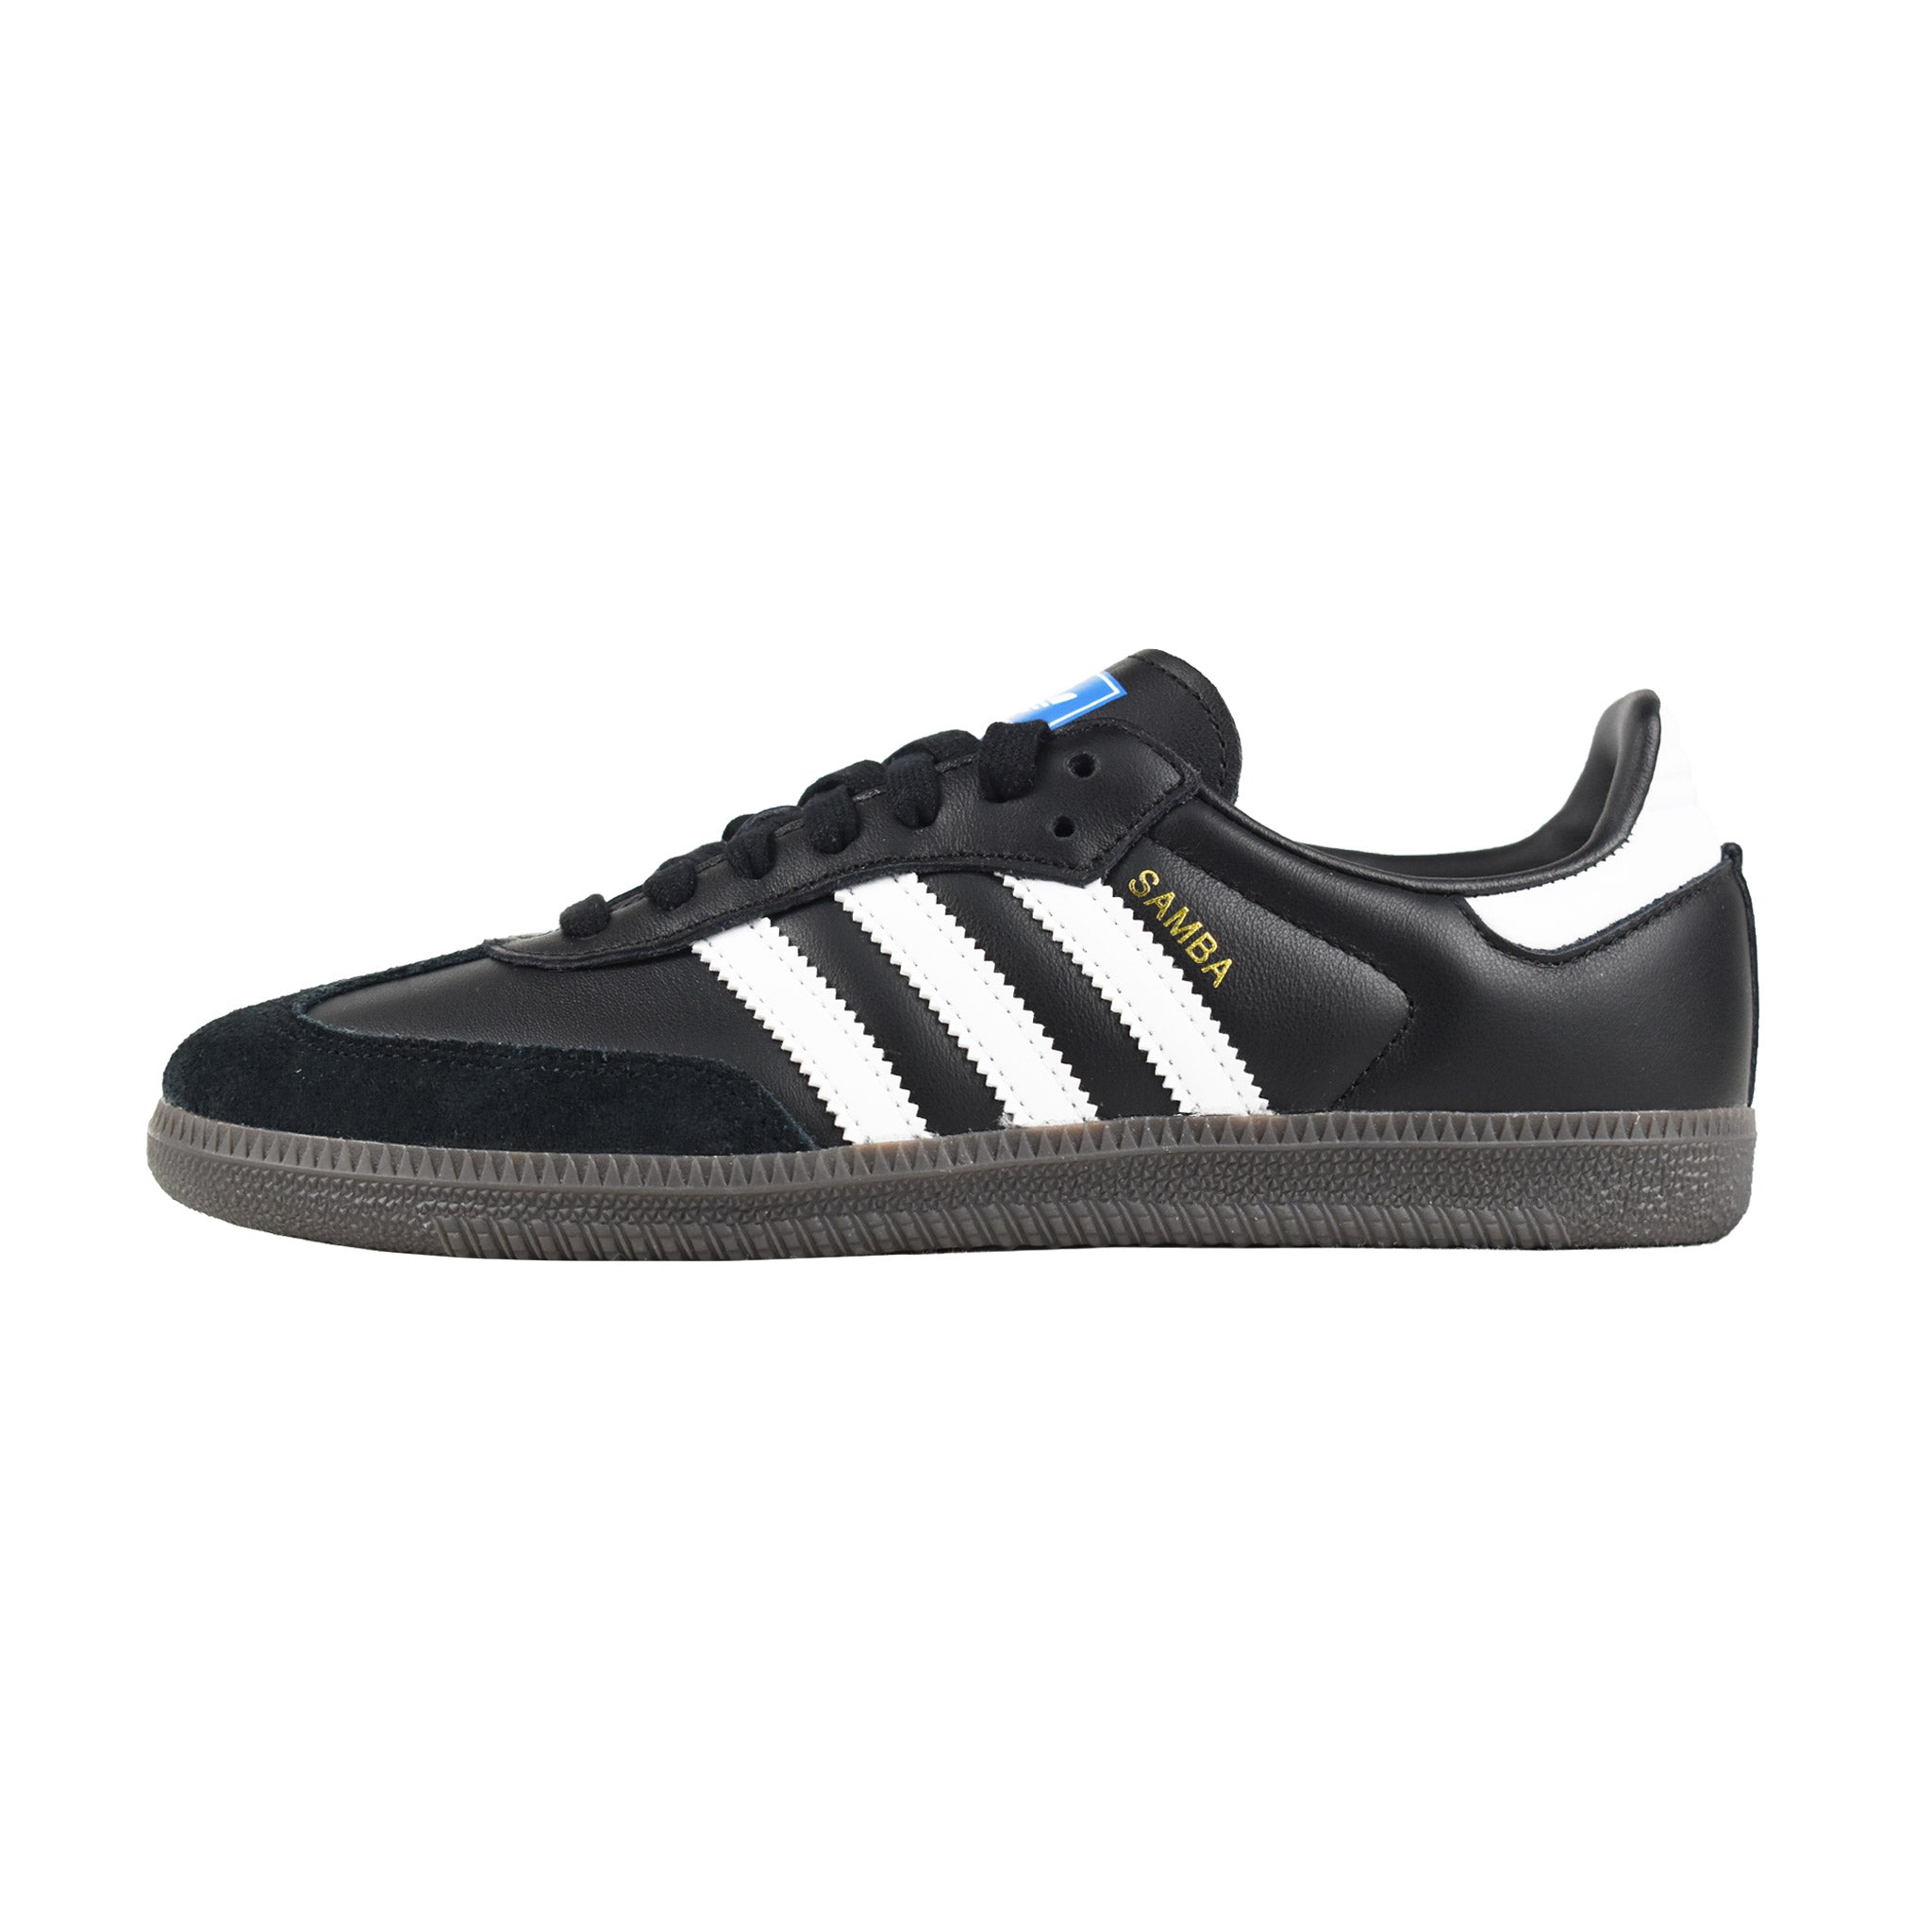 Adidas Samba OG - Black | Points Streetwear Store | Brisbane